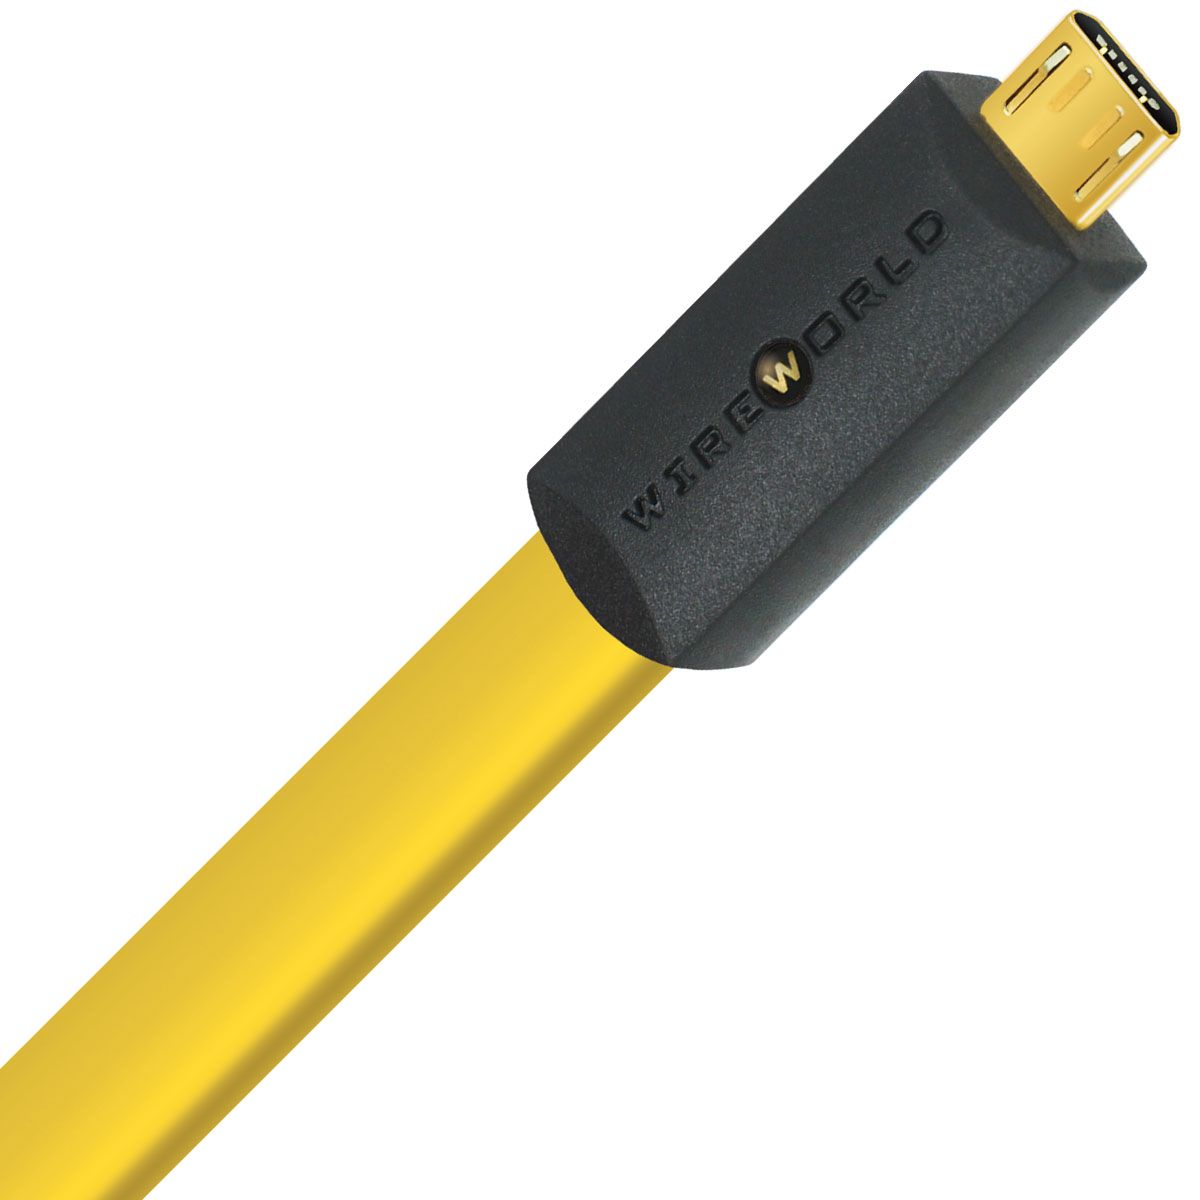 WIREWORLD Chroma 8 USB 2.0 A to B/ 1M